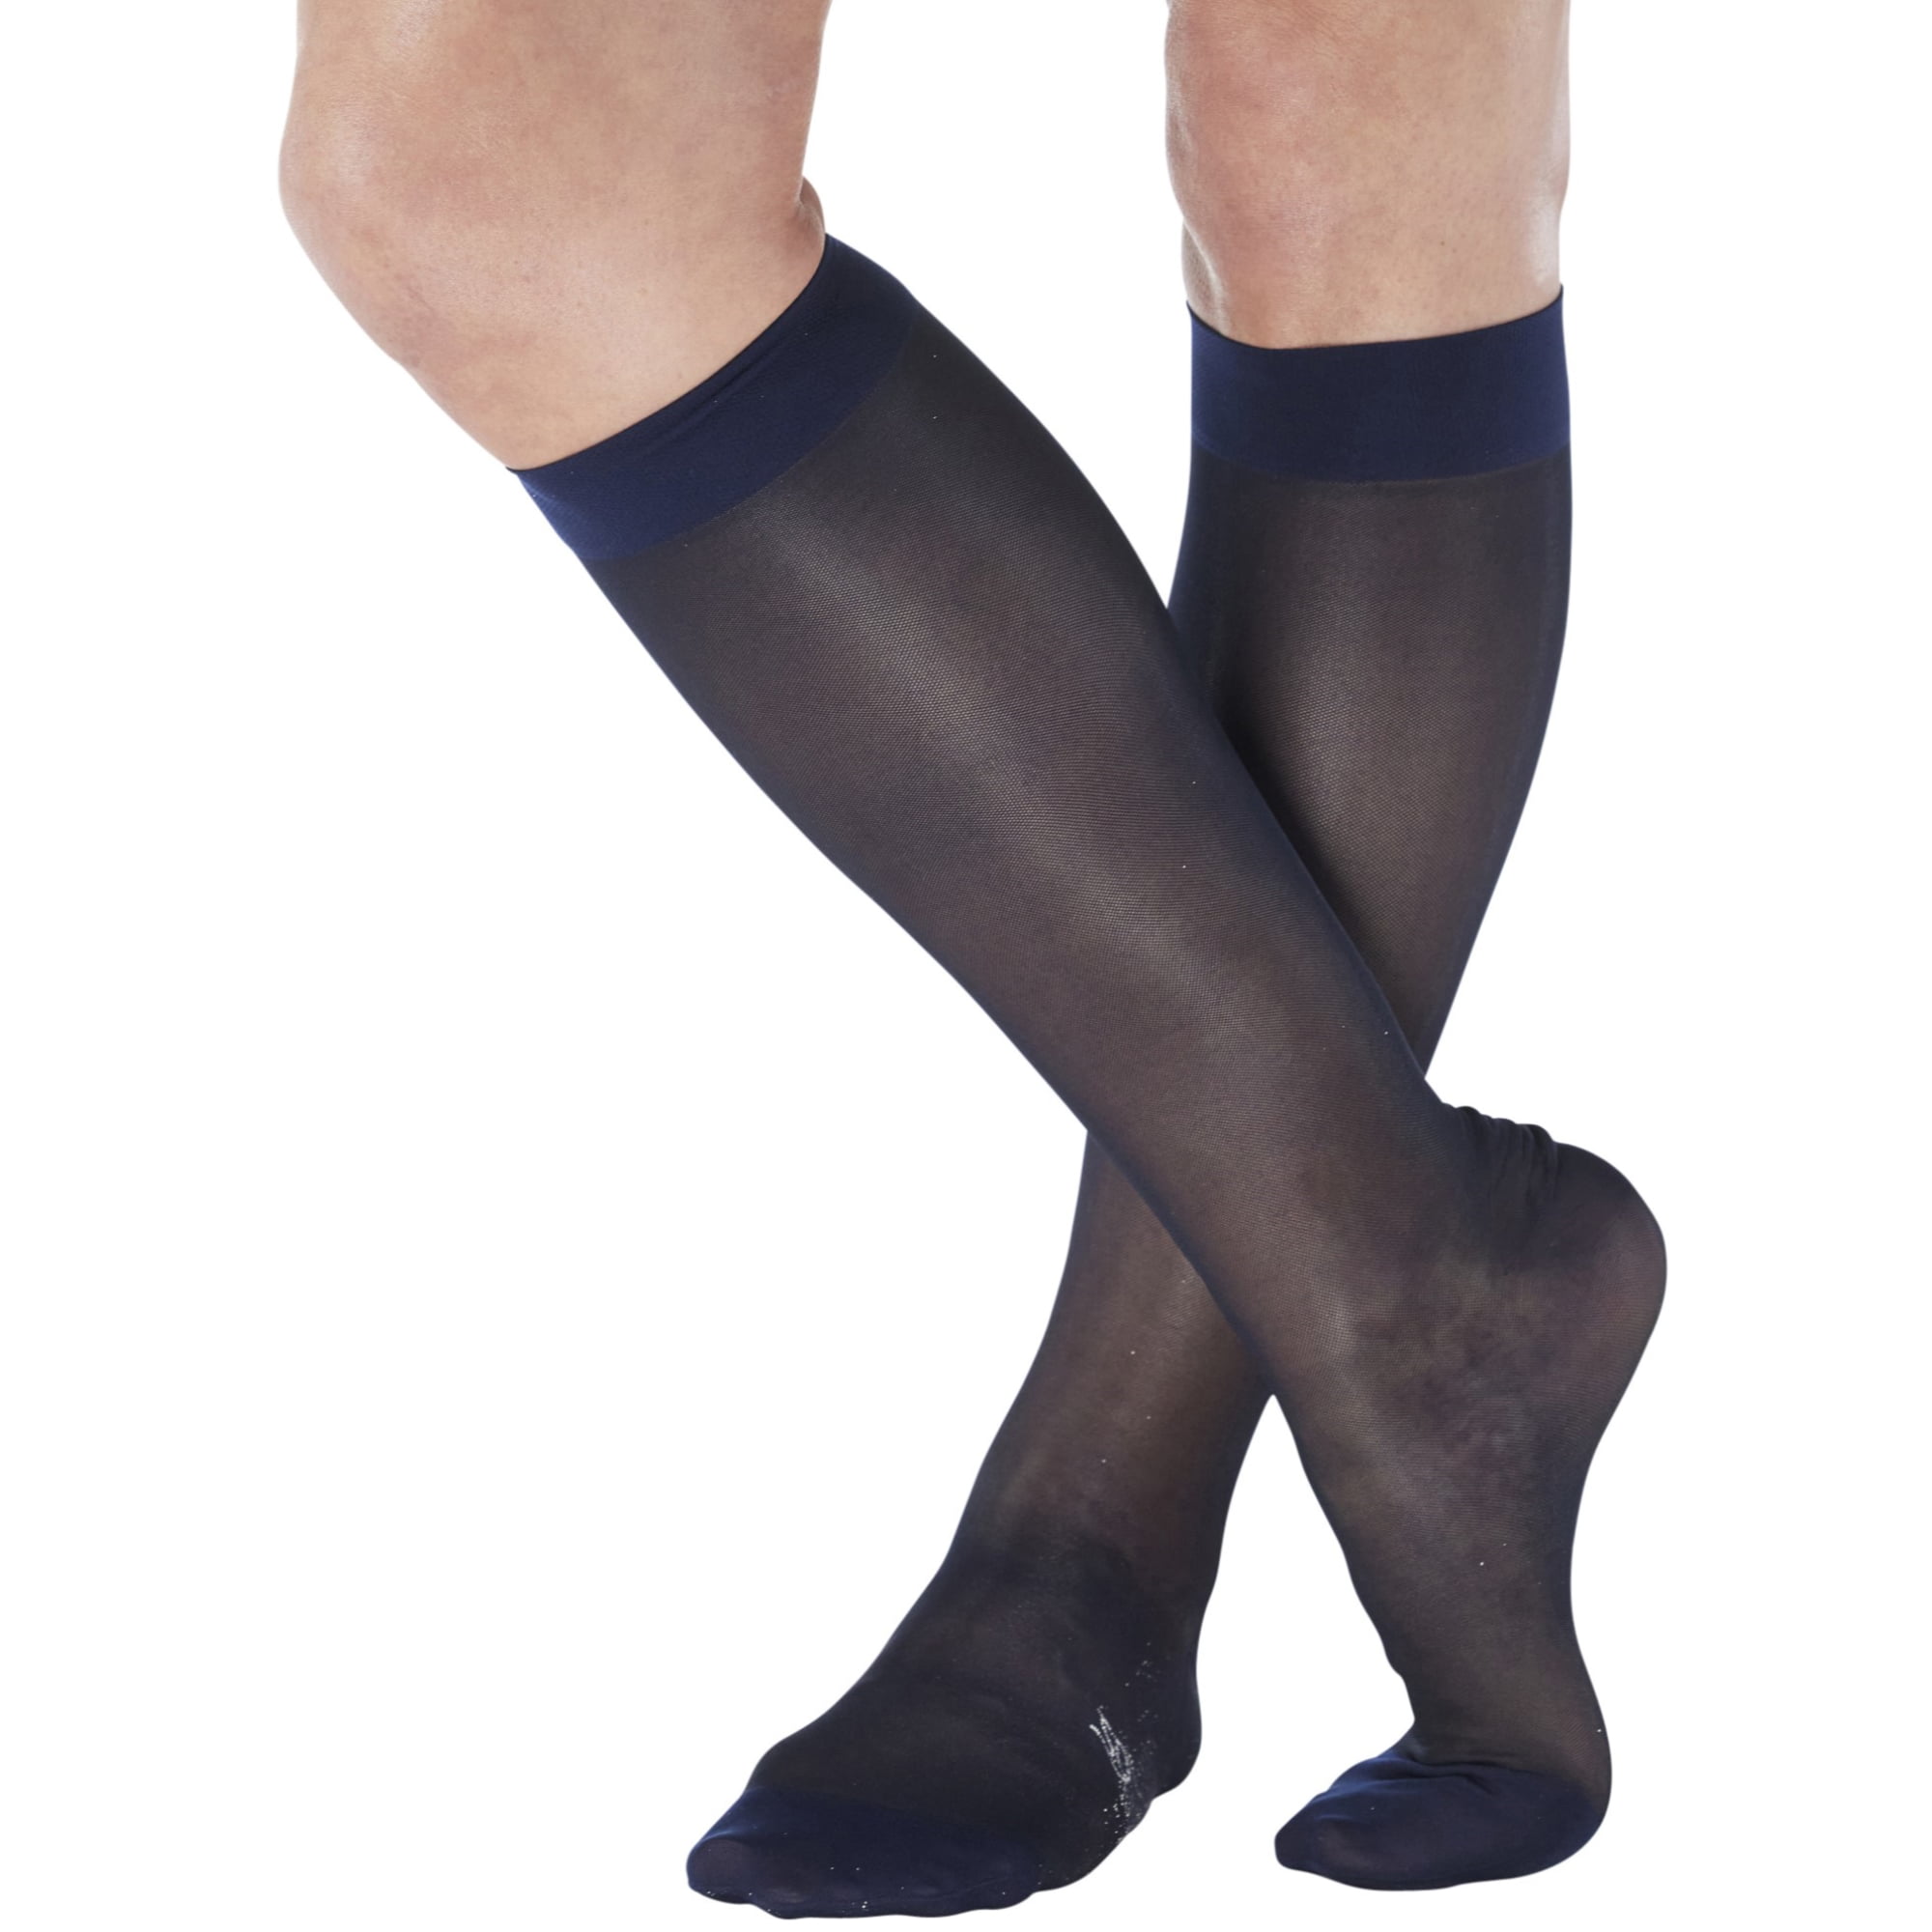 Women's Mild Compression 8-15 mmhg Striped Knee High Black Socks Size 9-11